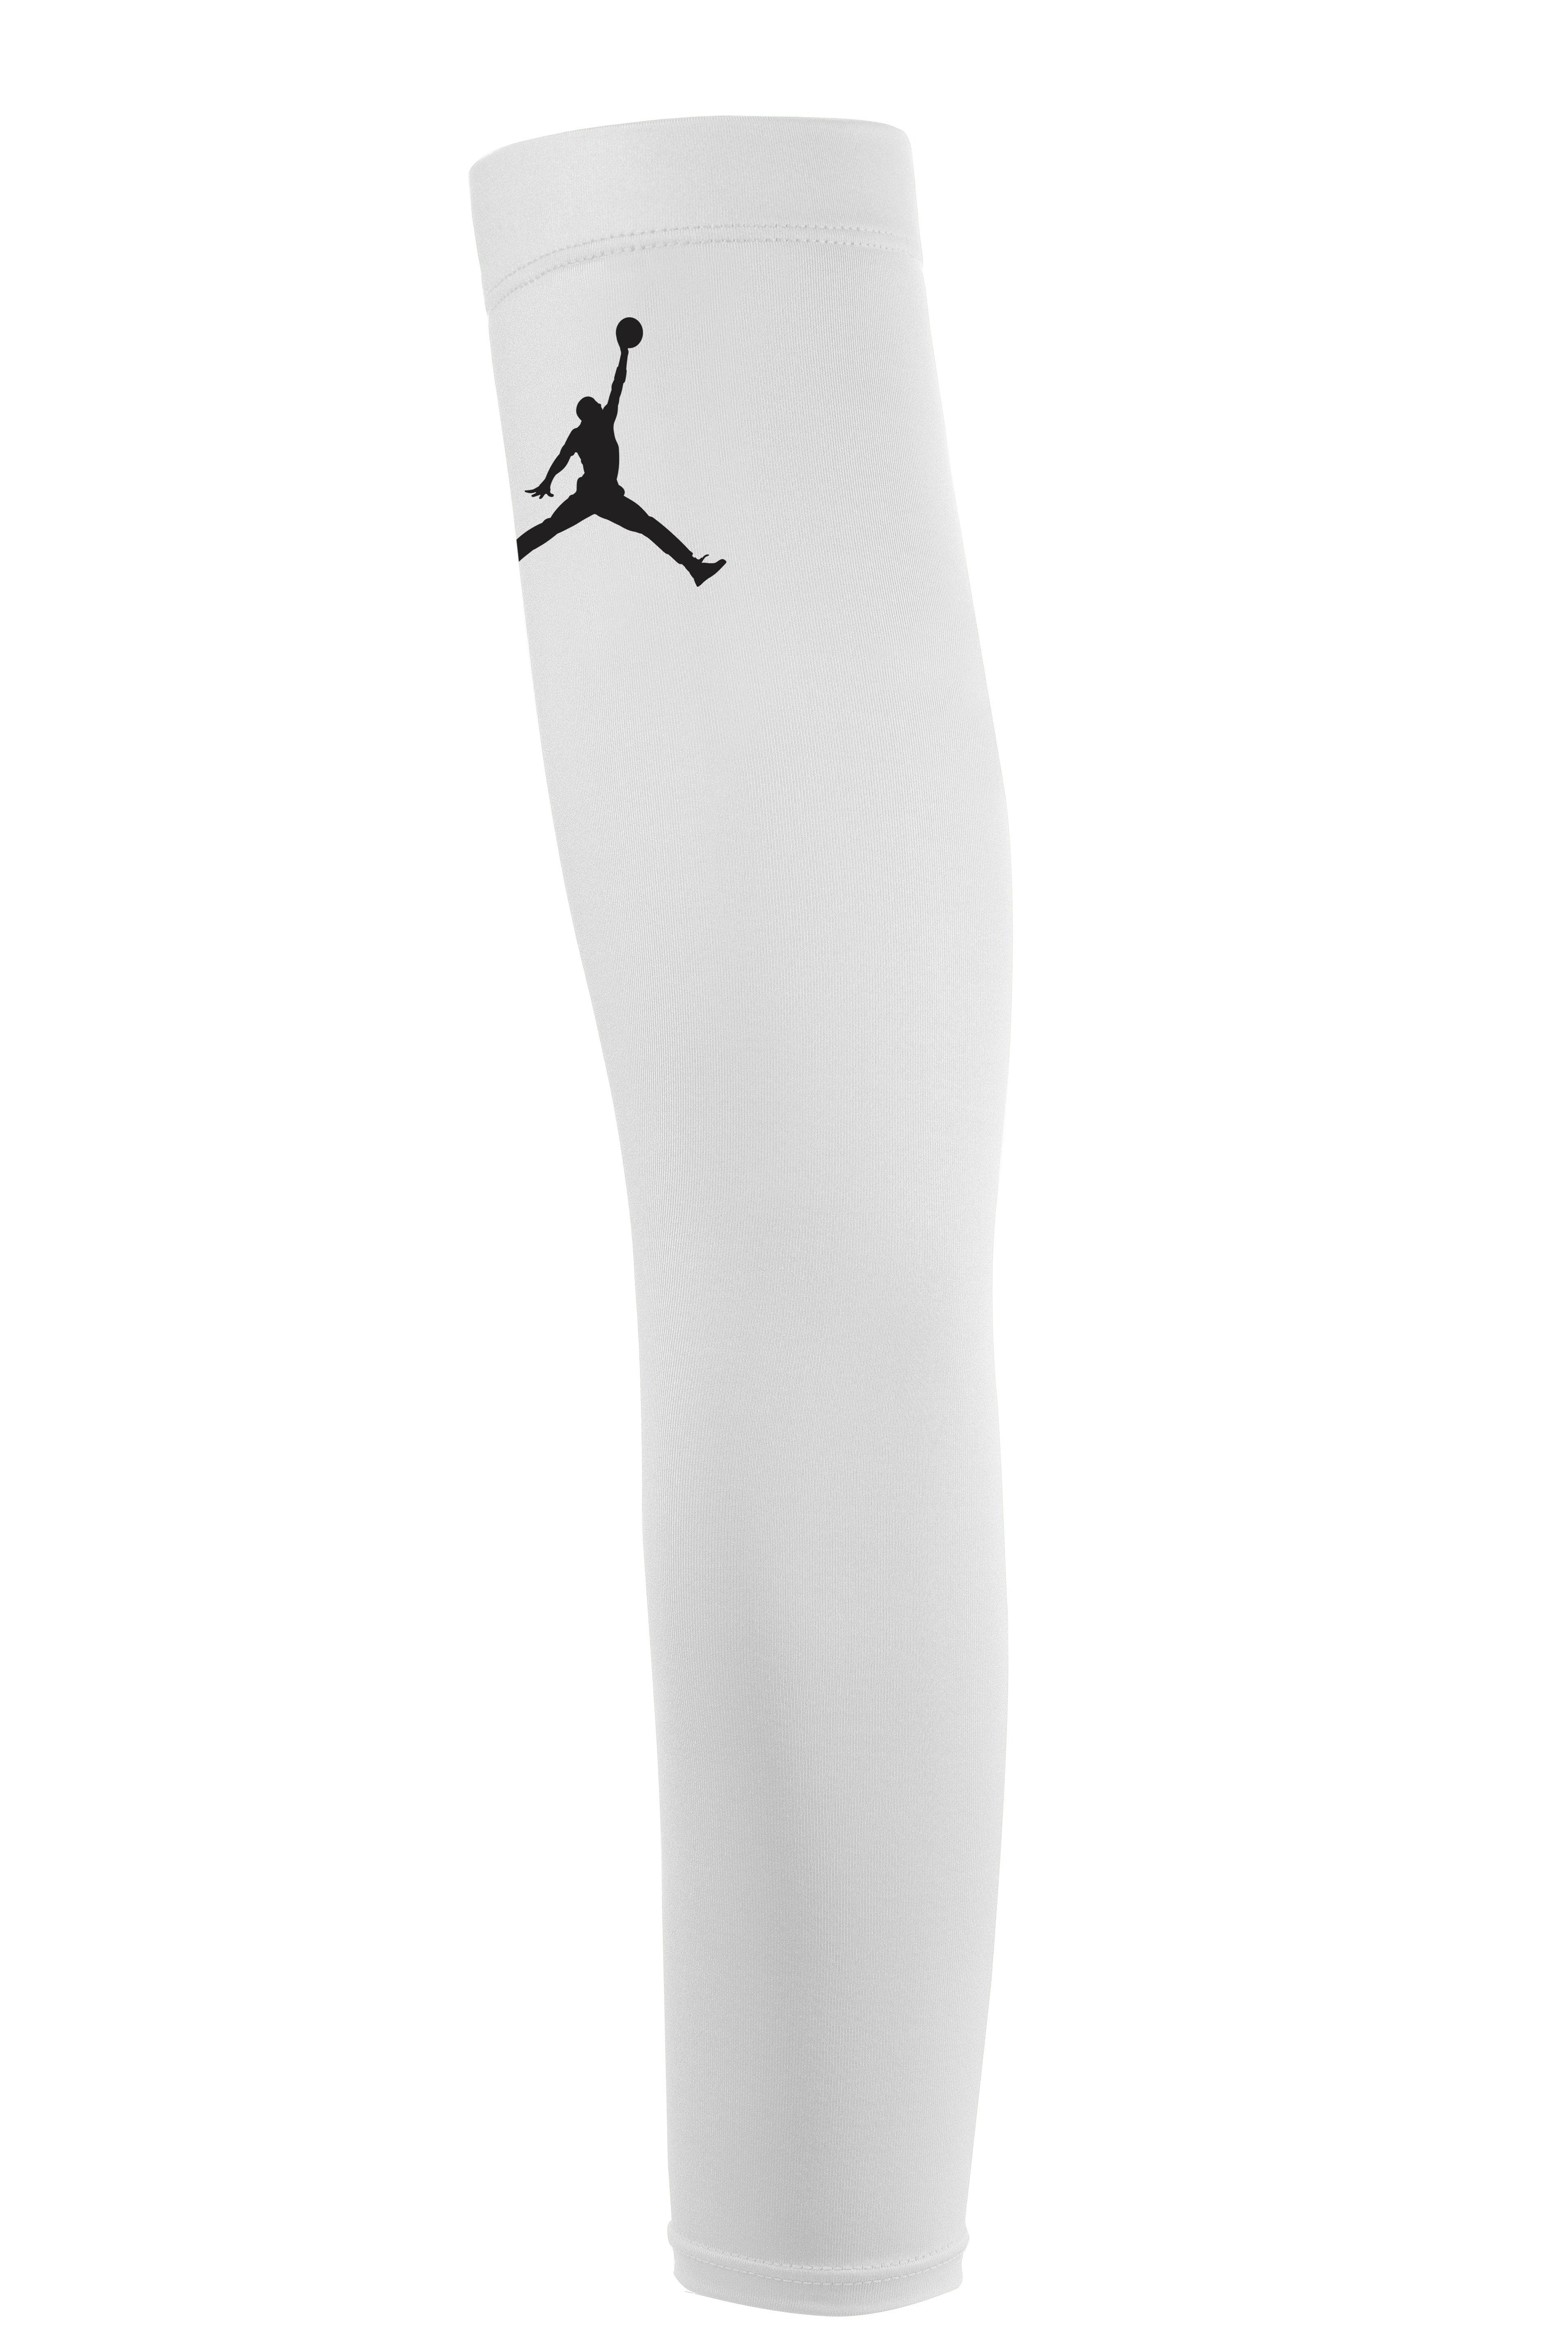 Jordan Football Sleeves - White/Black L/XL - Hibbett